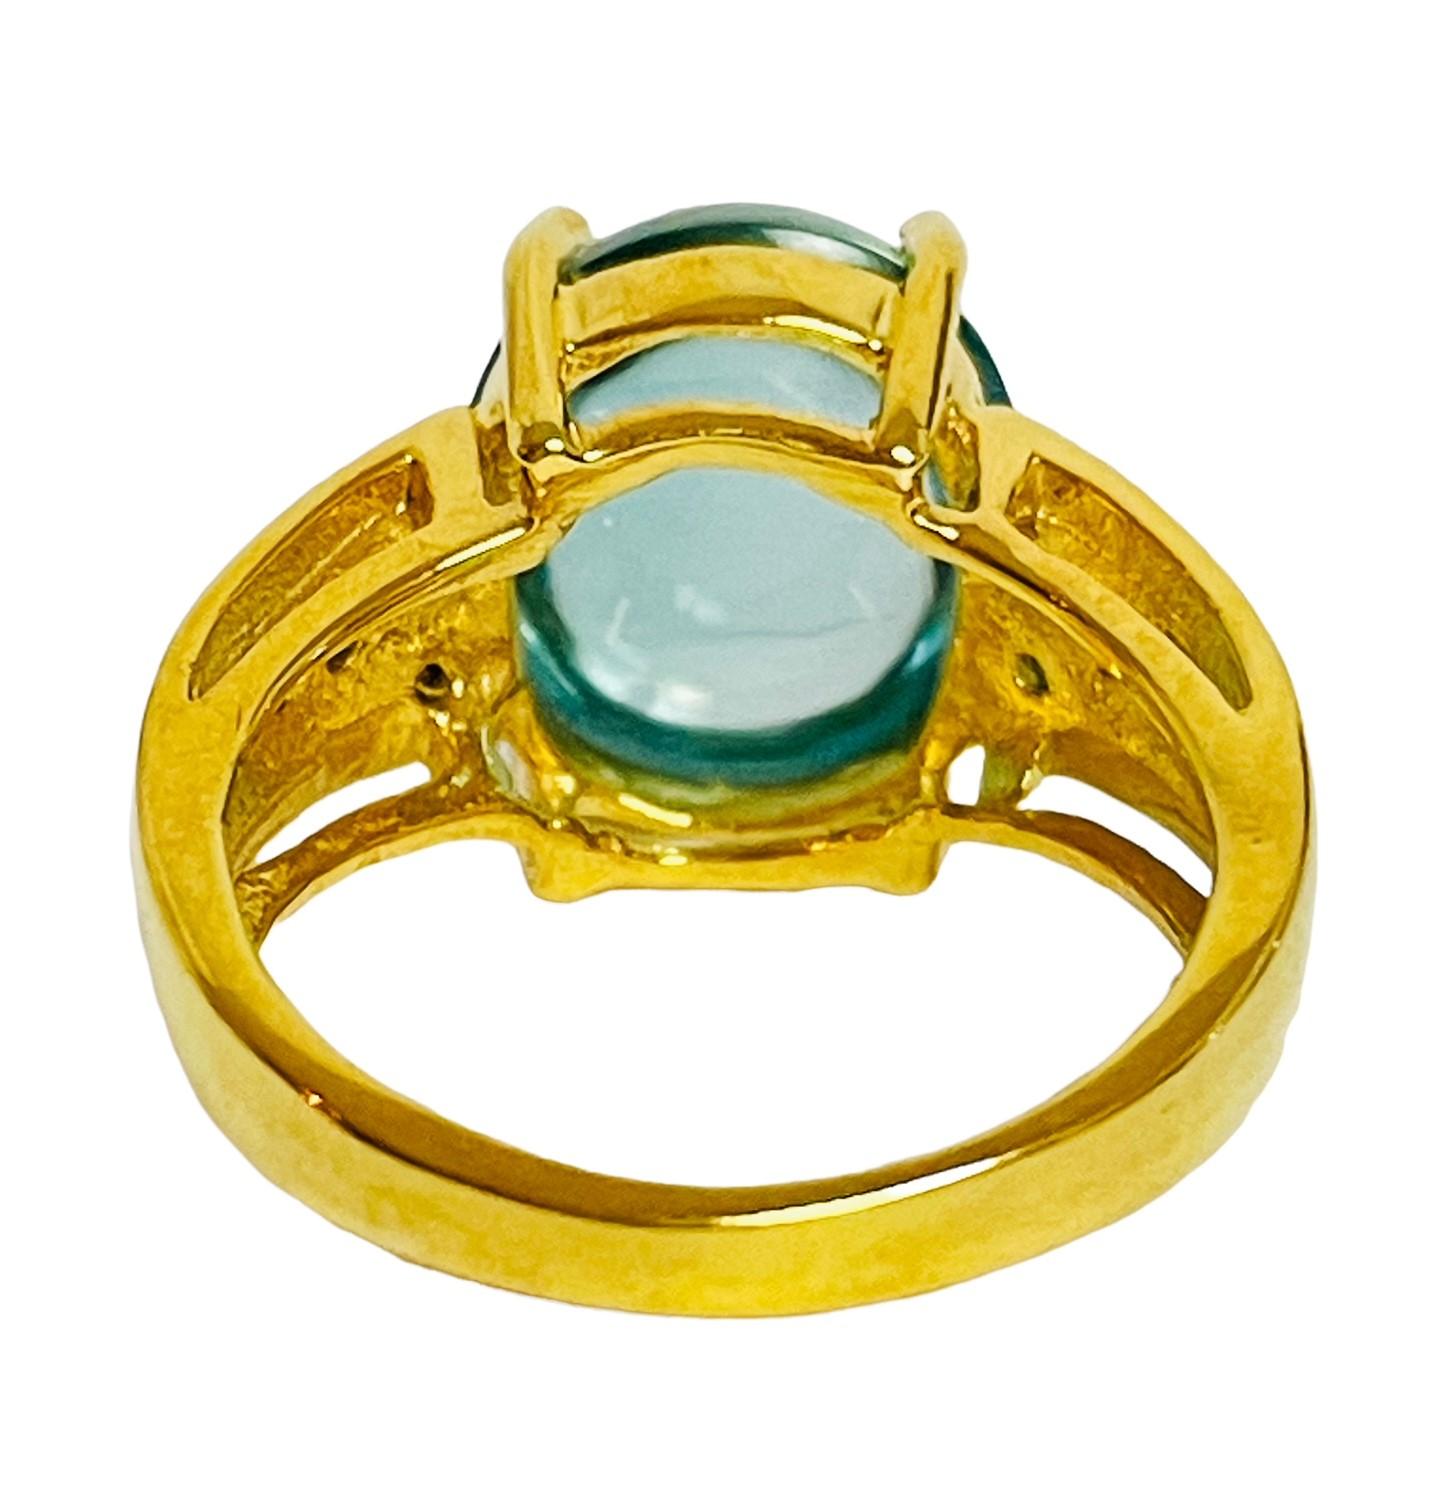 Cabochon New Aquamarine 7.80 Ct Cabachon 14k Yellow Gold Plated Sterling Ring